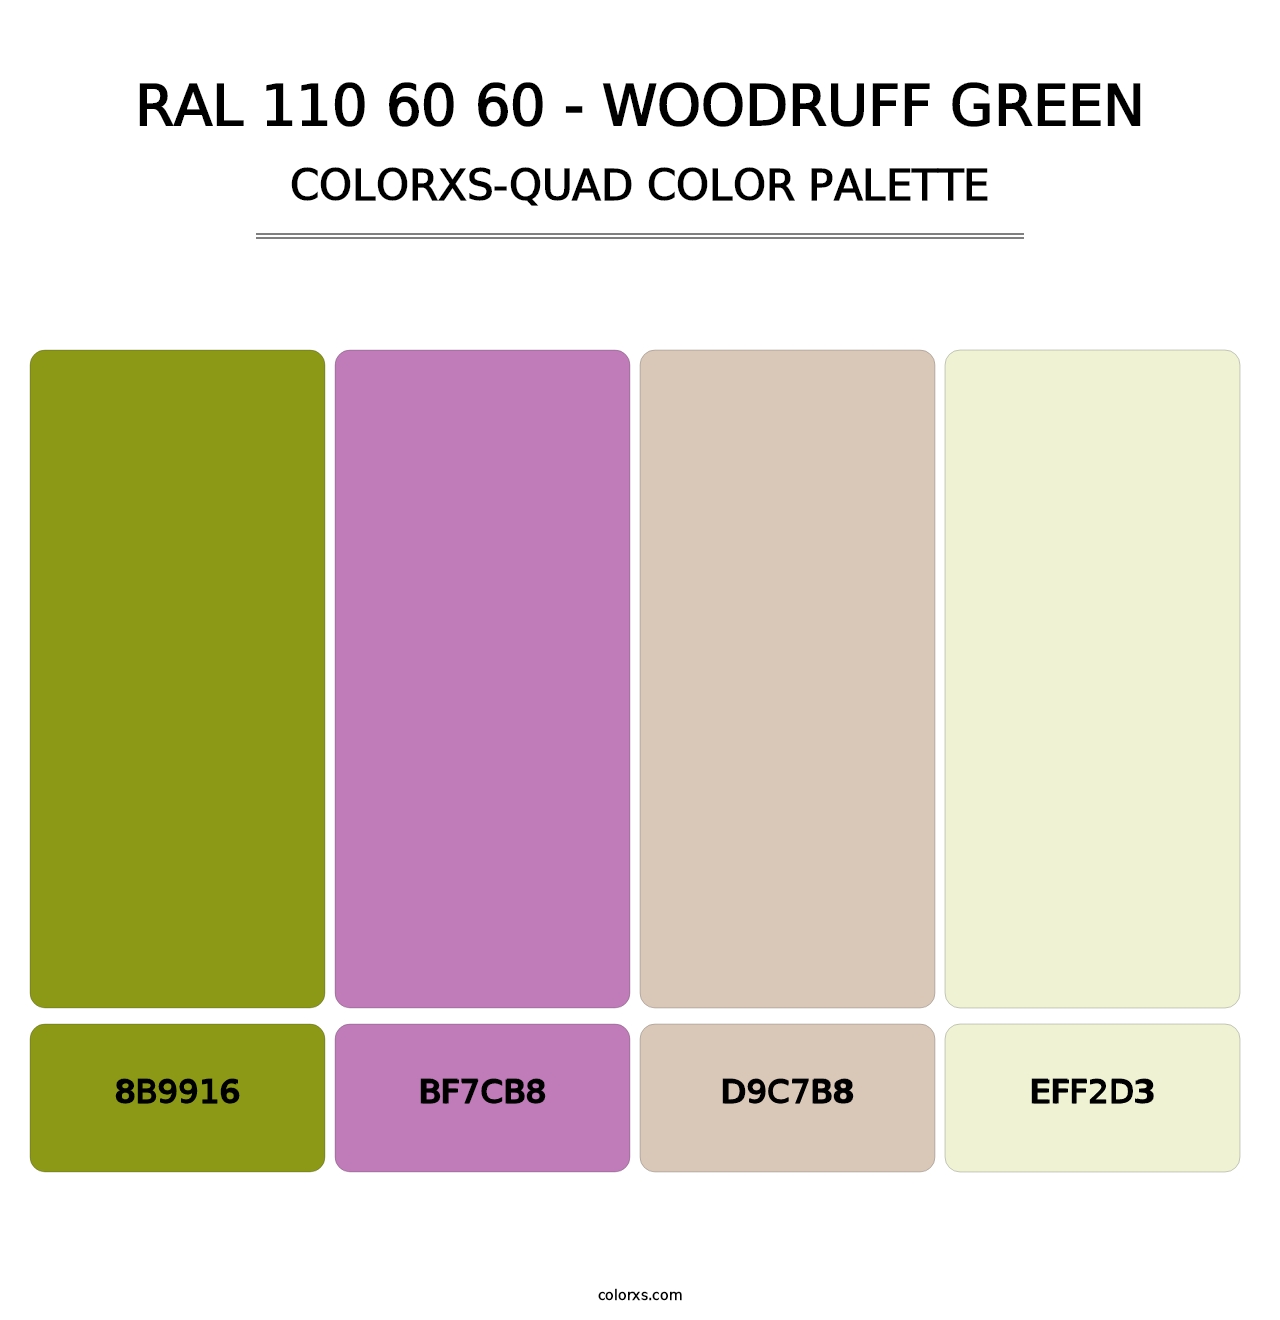 RAL 110 60 60 - Woodruff Green - Colorxs Quad Palette